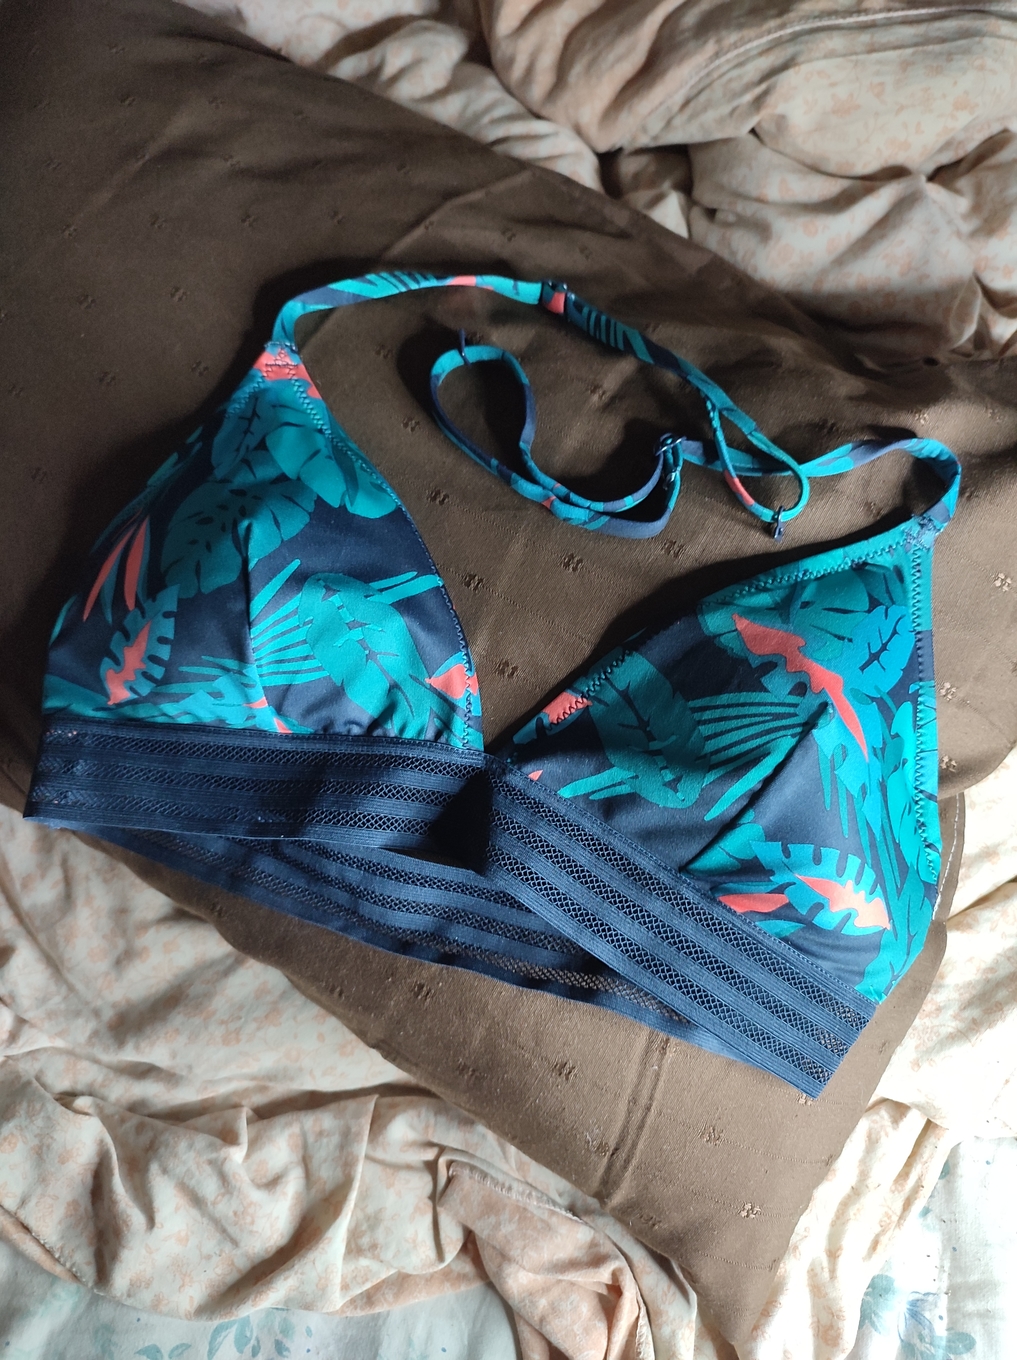 New Swimsuits from Kiabi